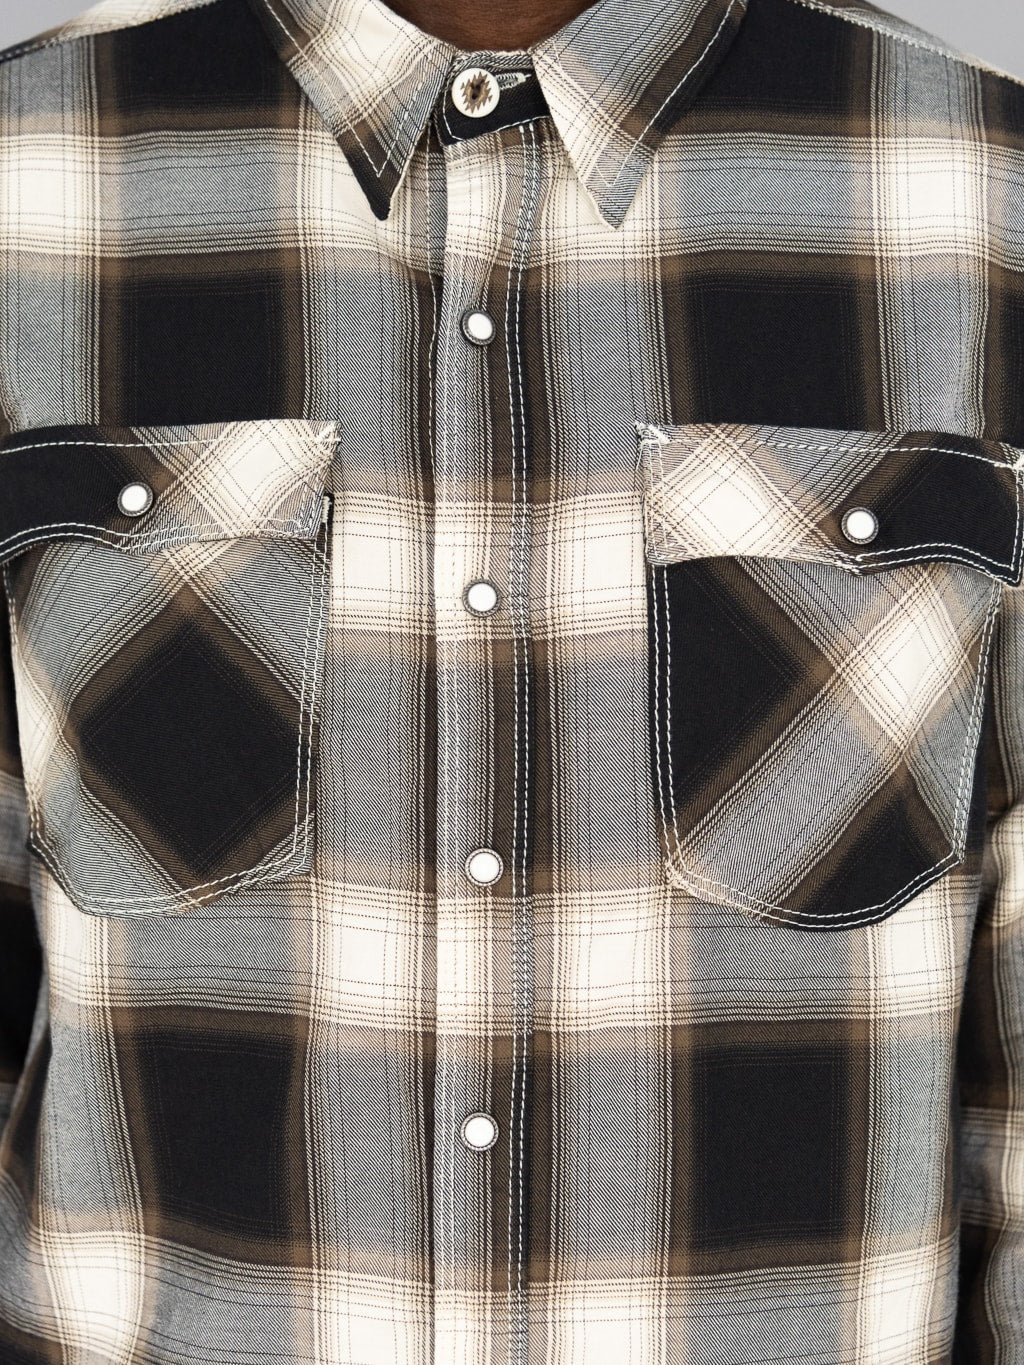 Freenote Cloth Lancaster Black Shadow Plaid Shirt wester chest pockets